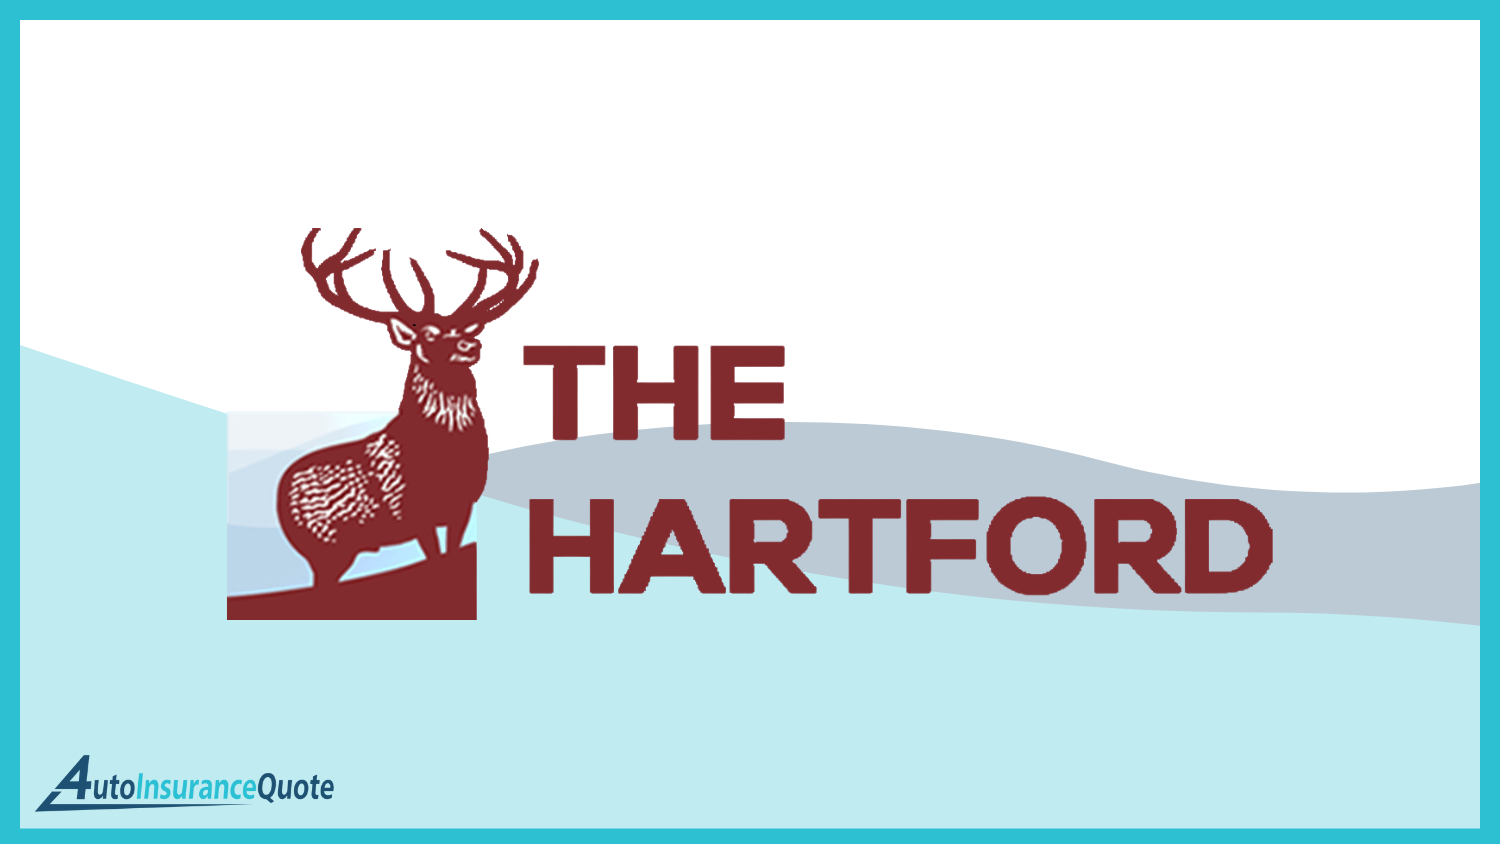 The Hartford: Best Fleet Vehicle Auto Insurance